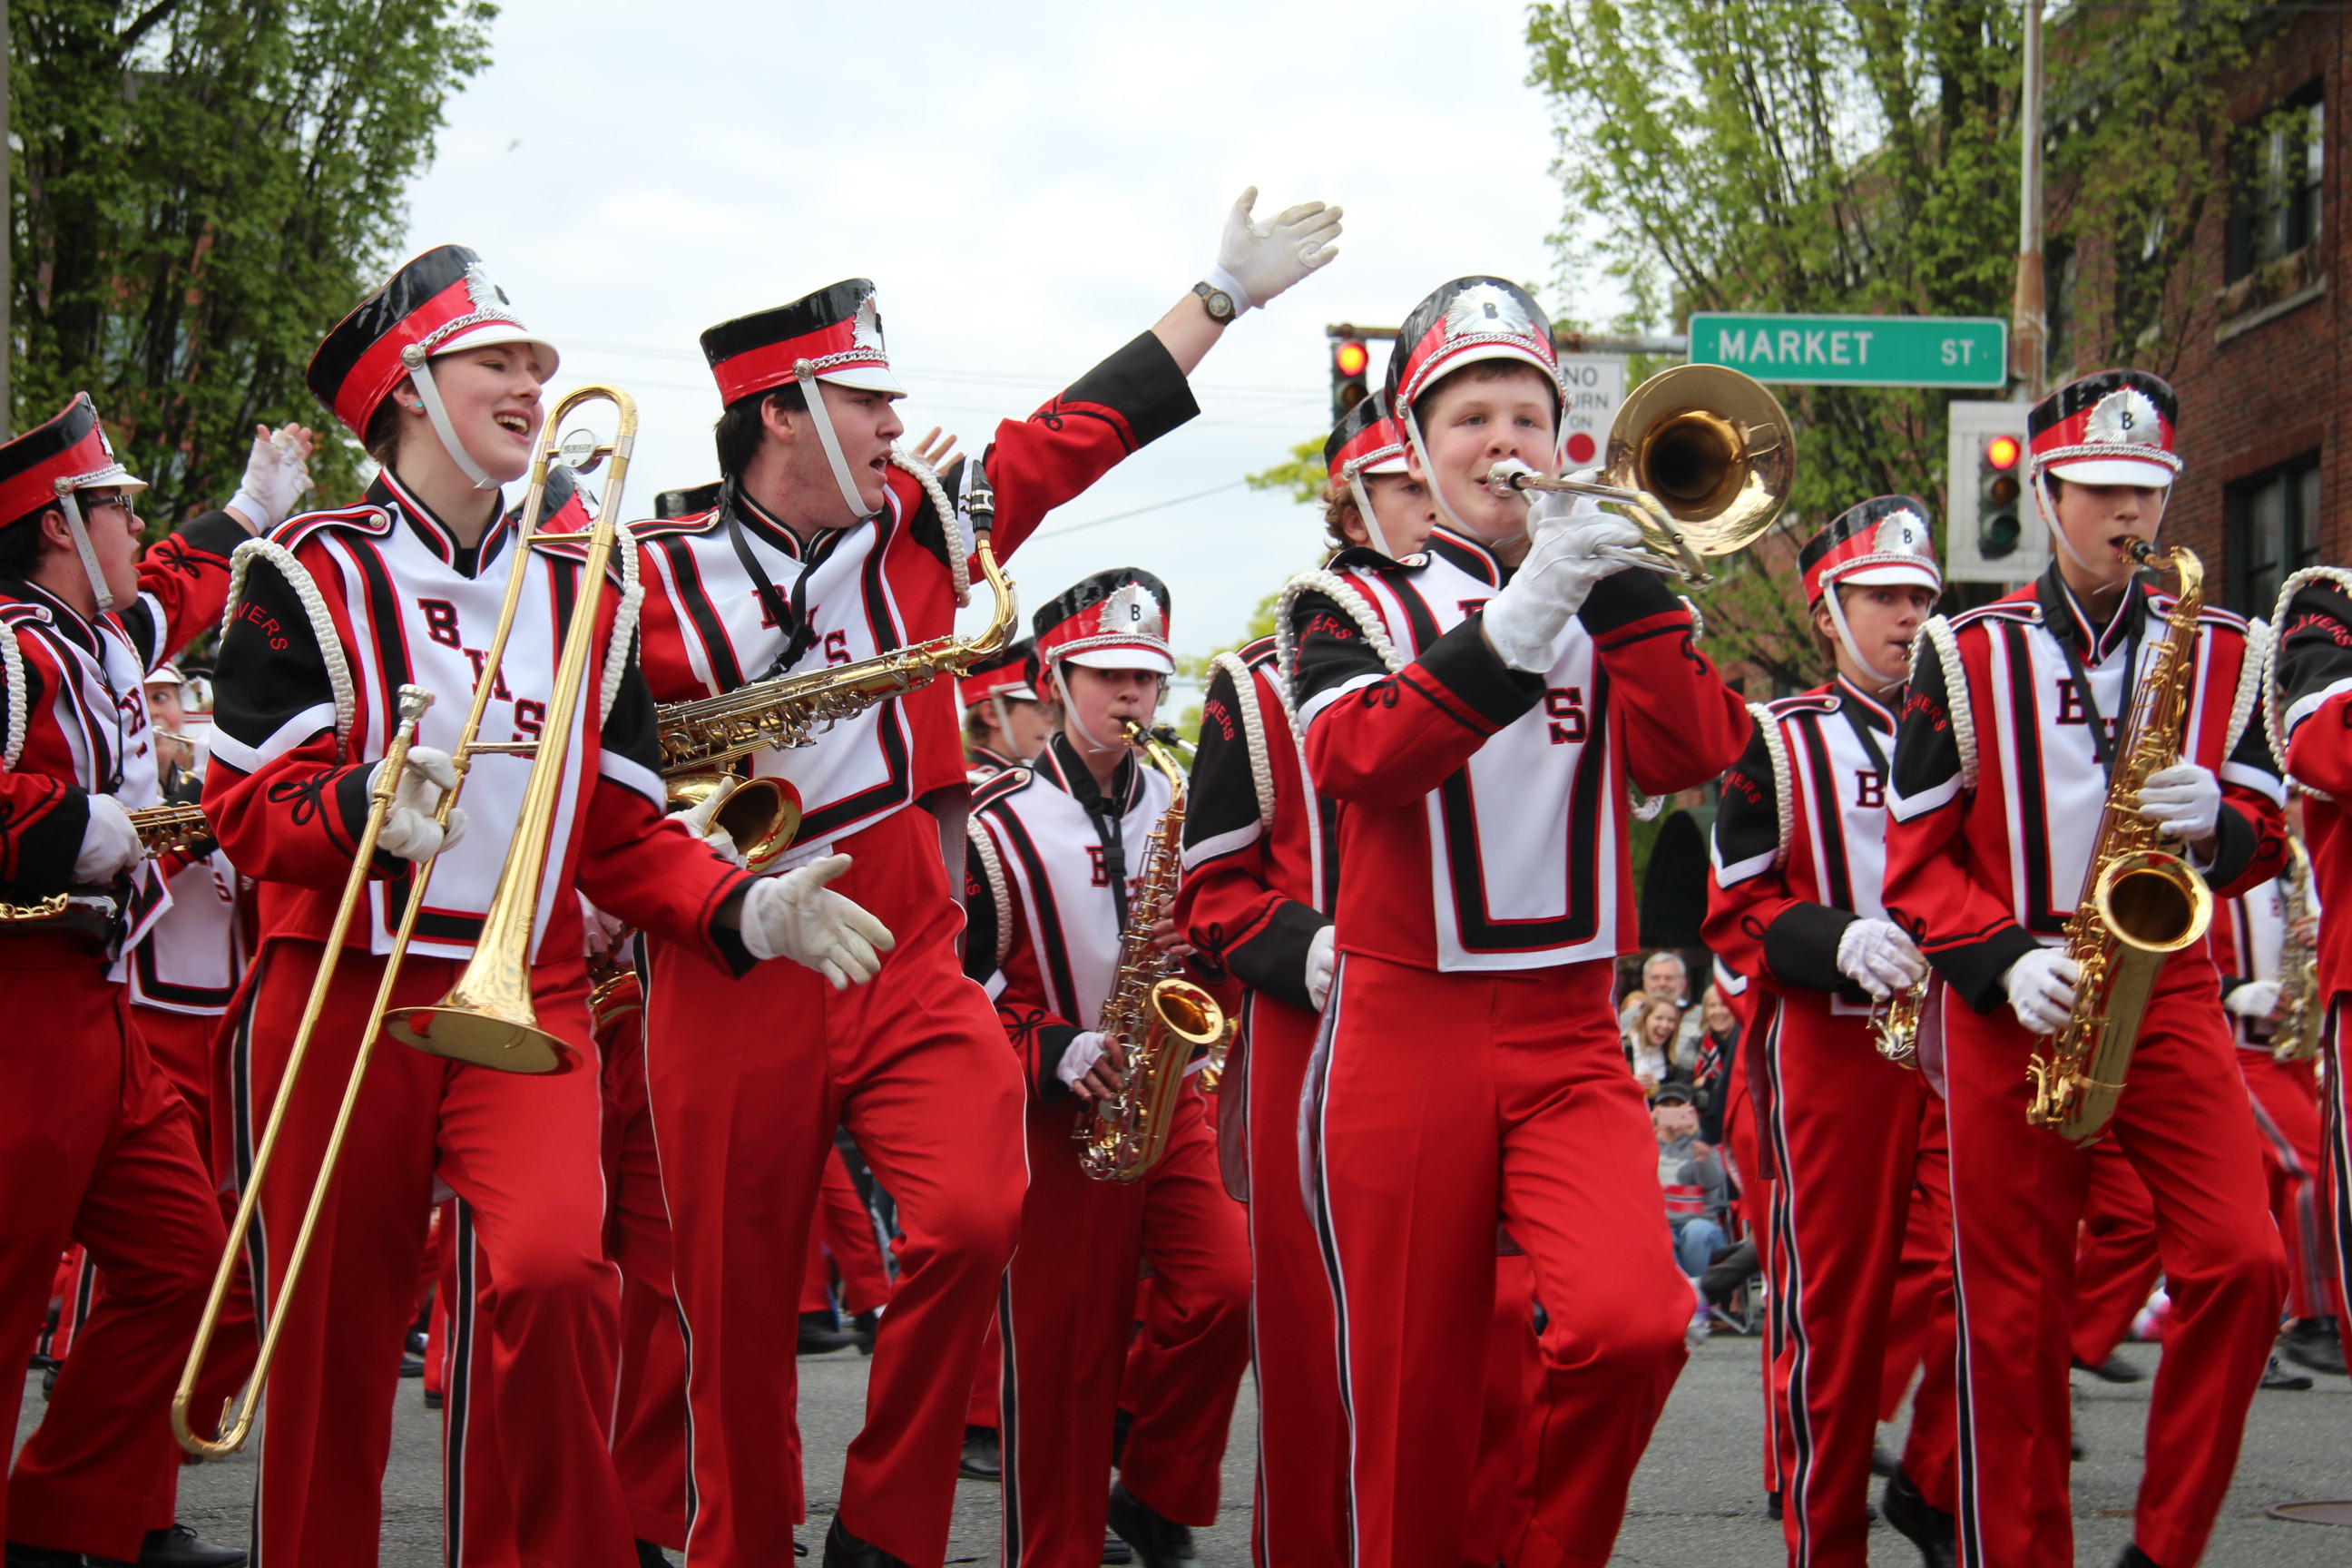 Syttende Mai Parade attracts thousands to Ballard, inspires smalltown